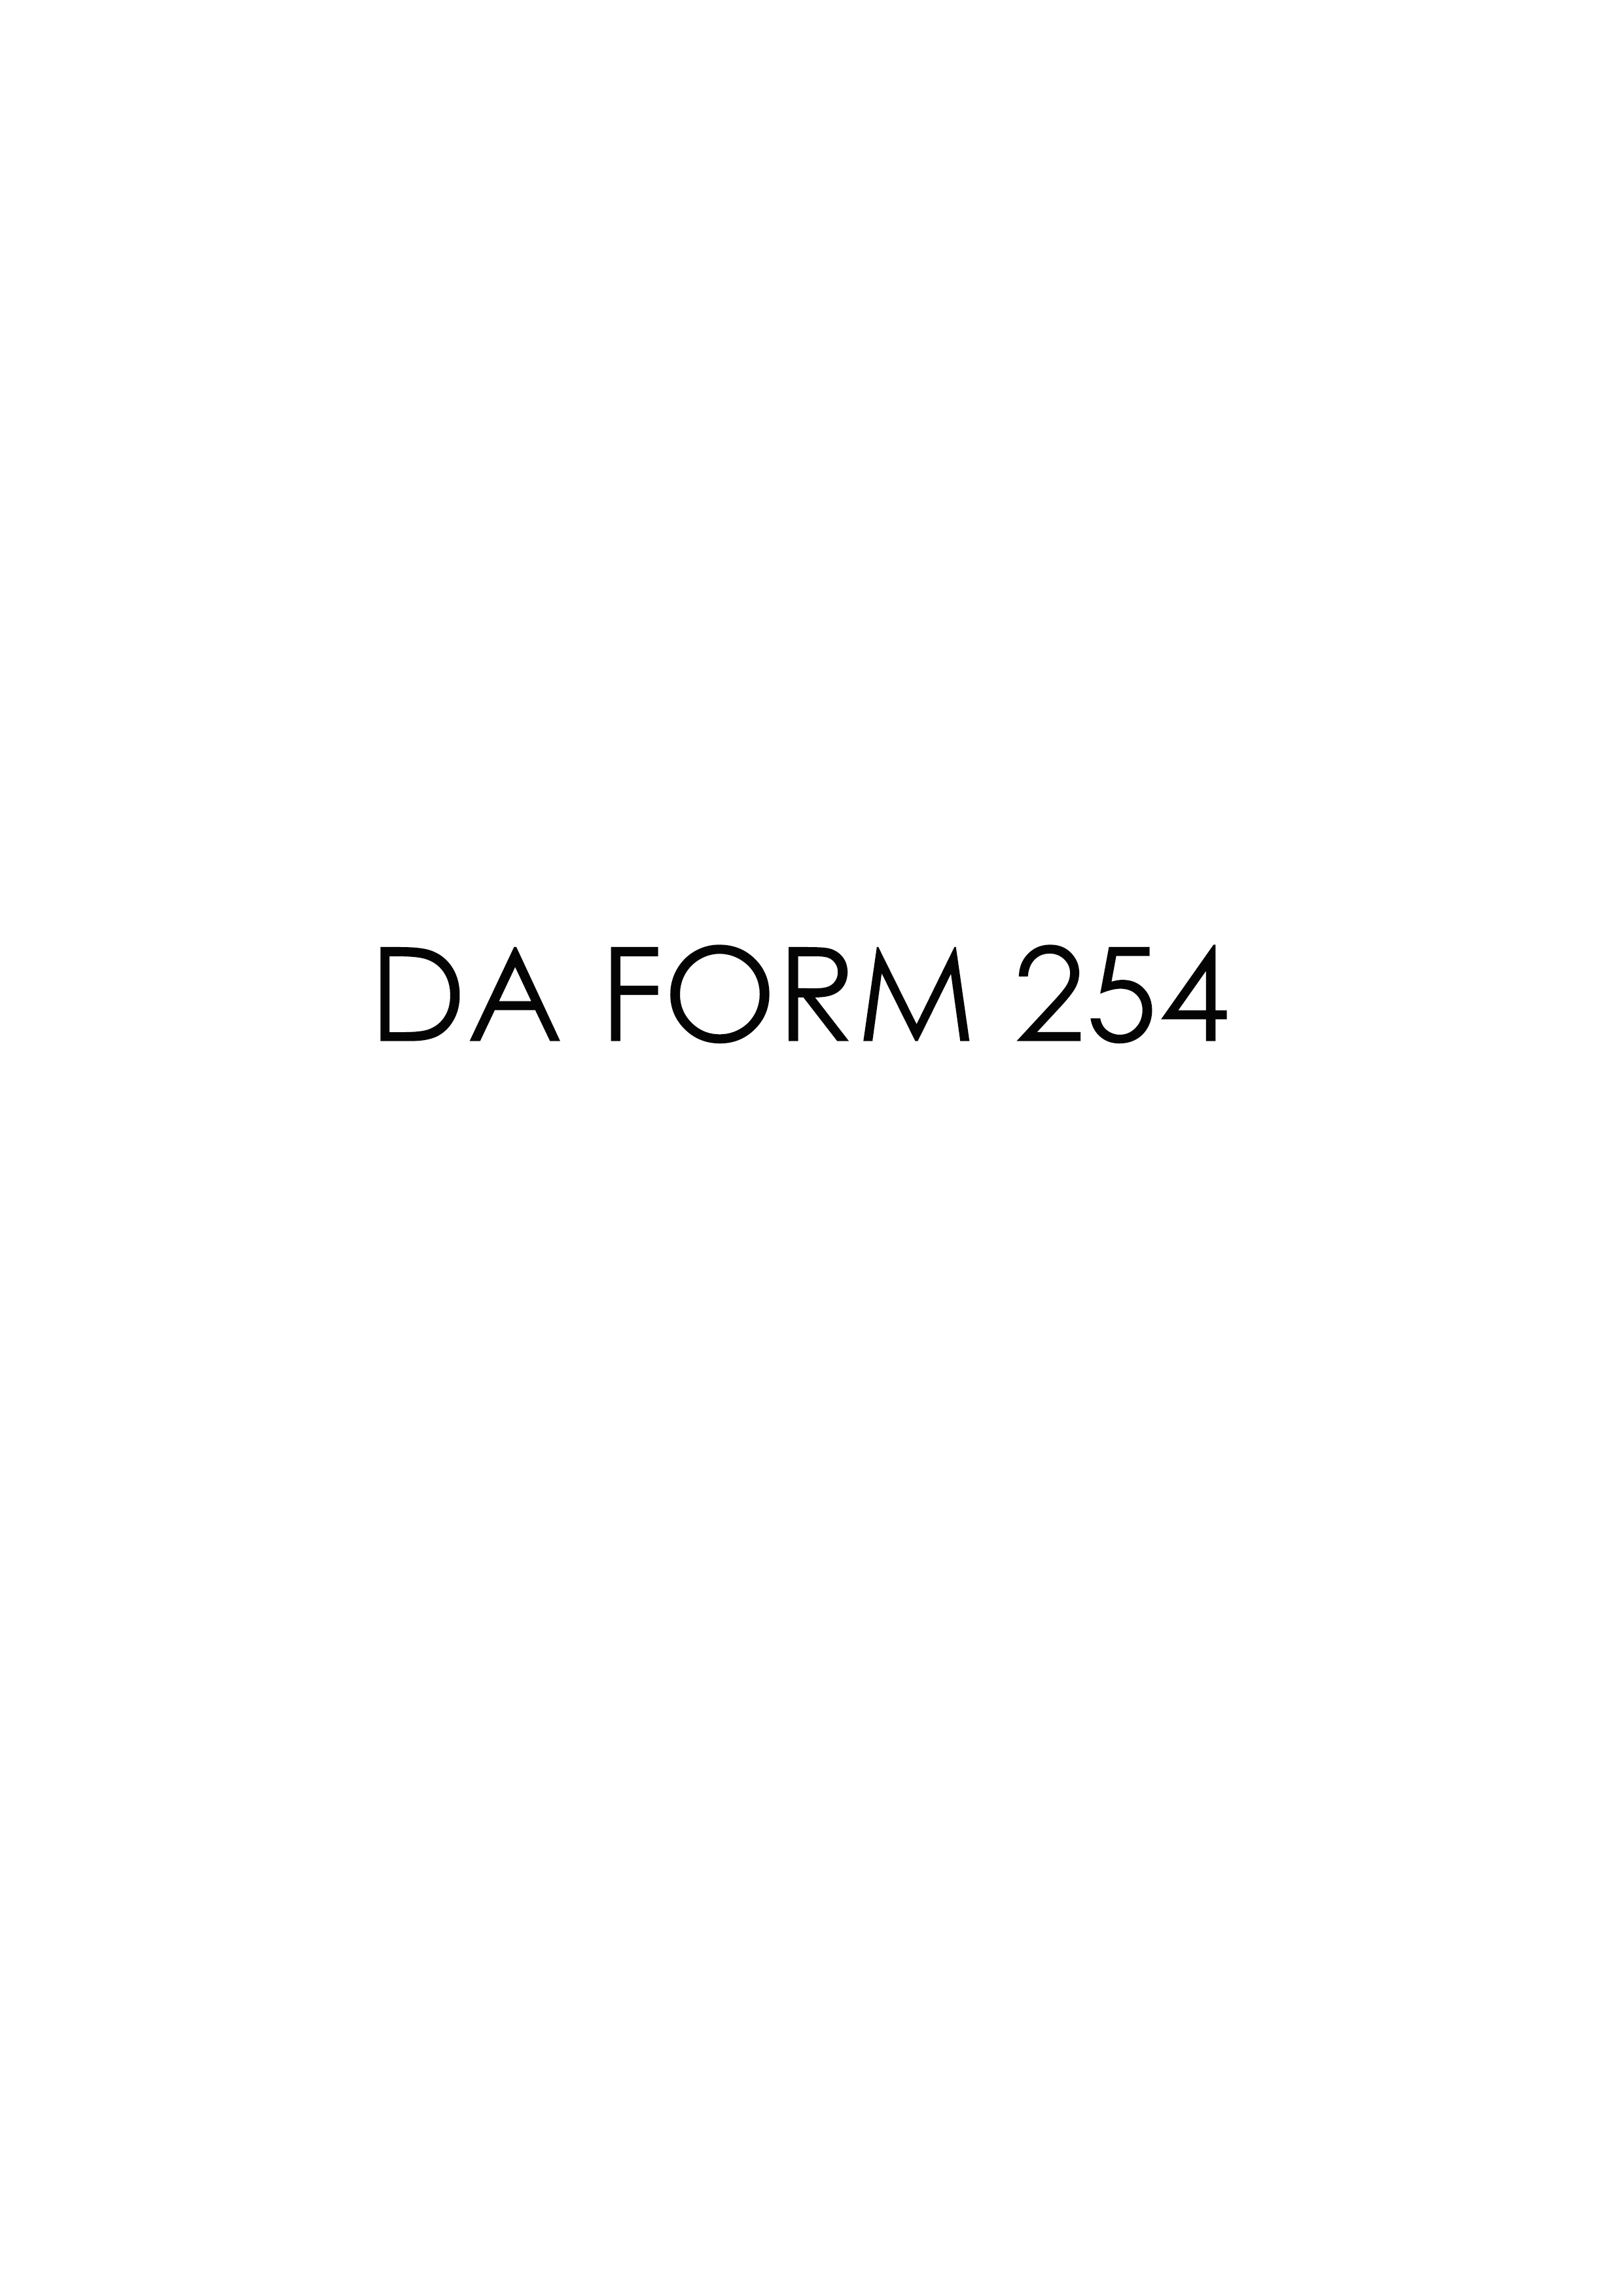 Download da 254 Form